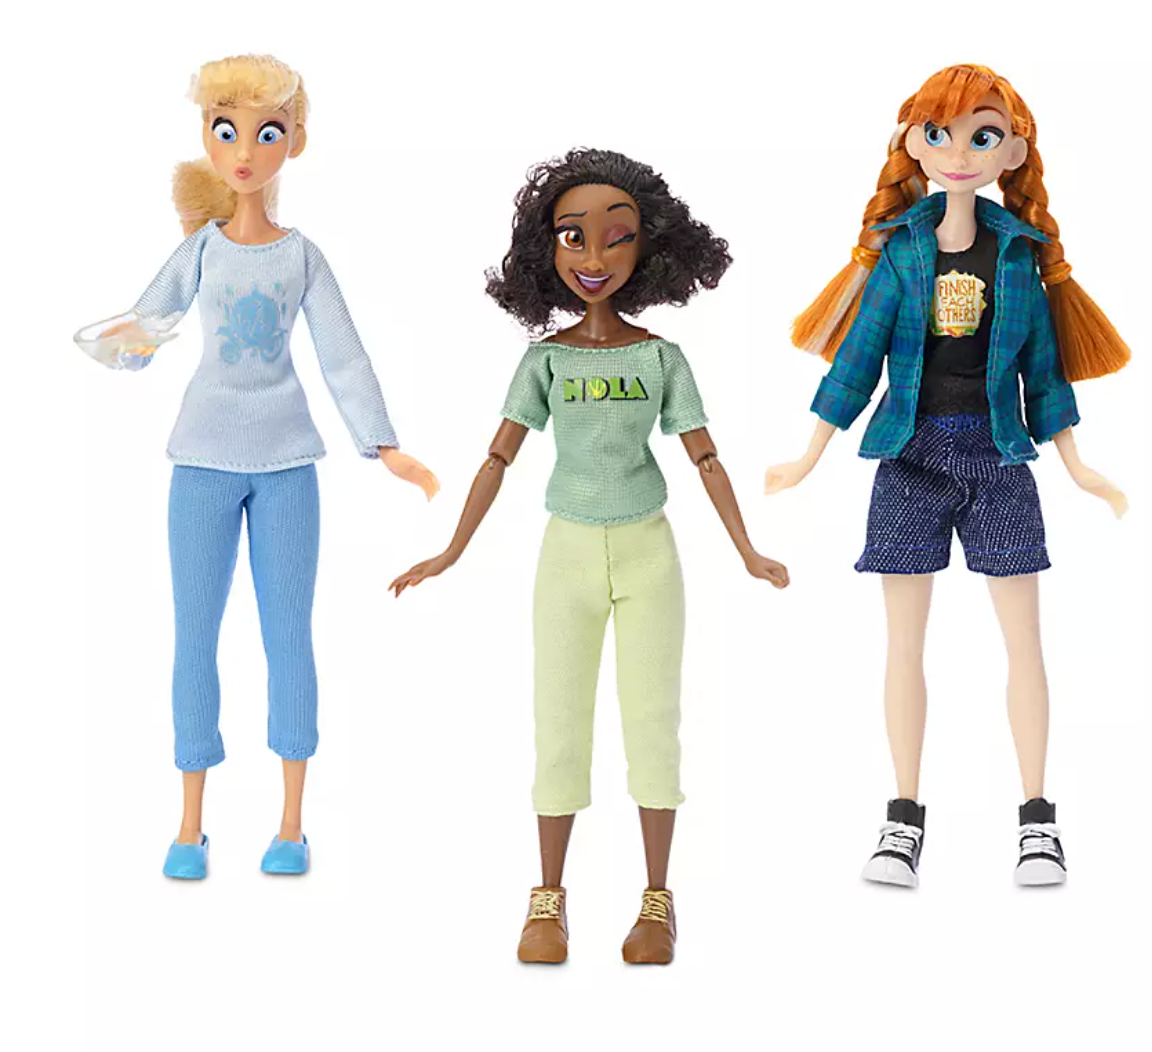 Disney Vanellope Comfy Princesses Dolls Gift Set Ralph Breaks the Internet New